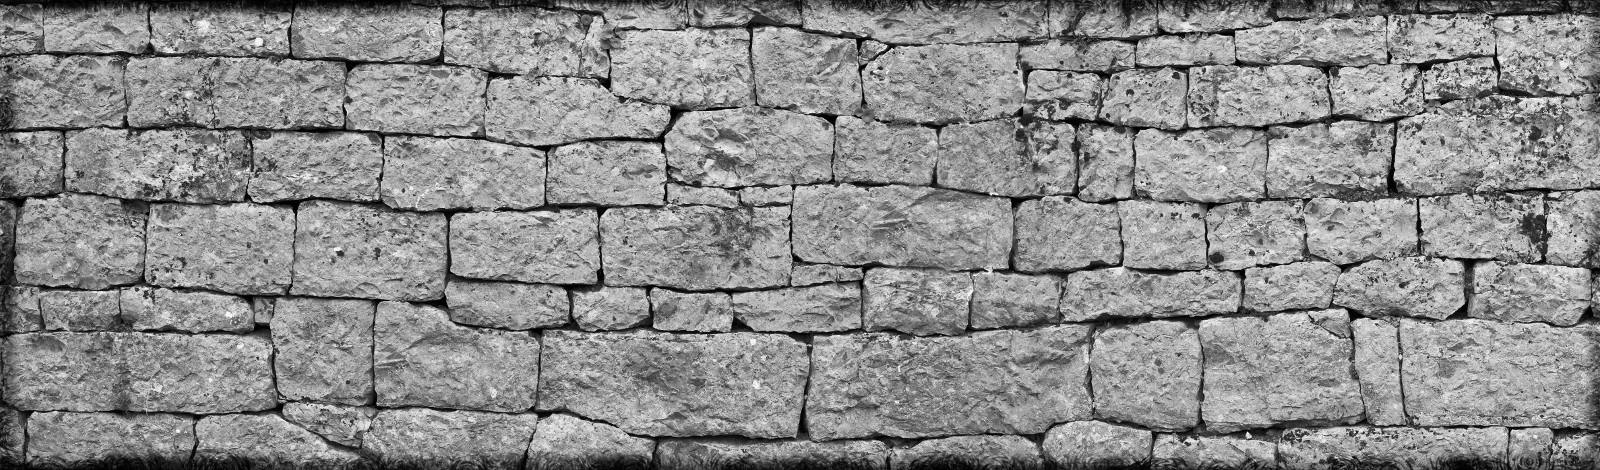 mur pierre seche calcaire